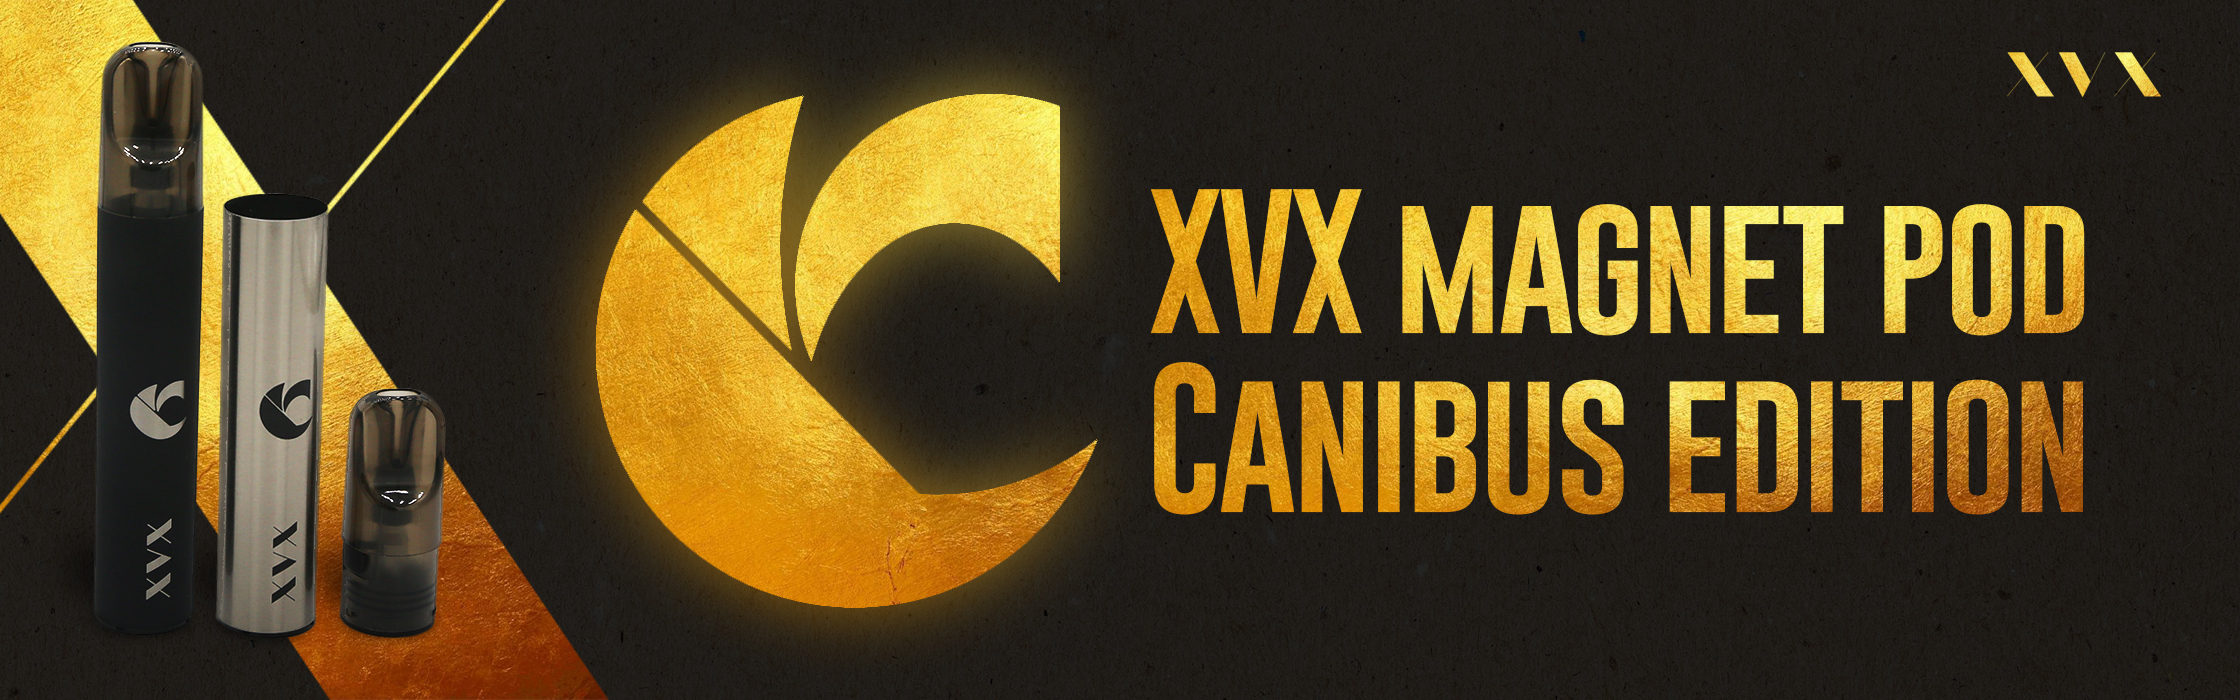 XVX MAGNET POD CANIBUS EDITION